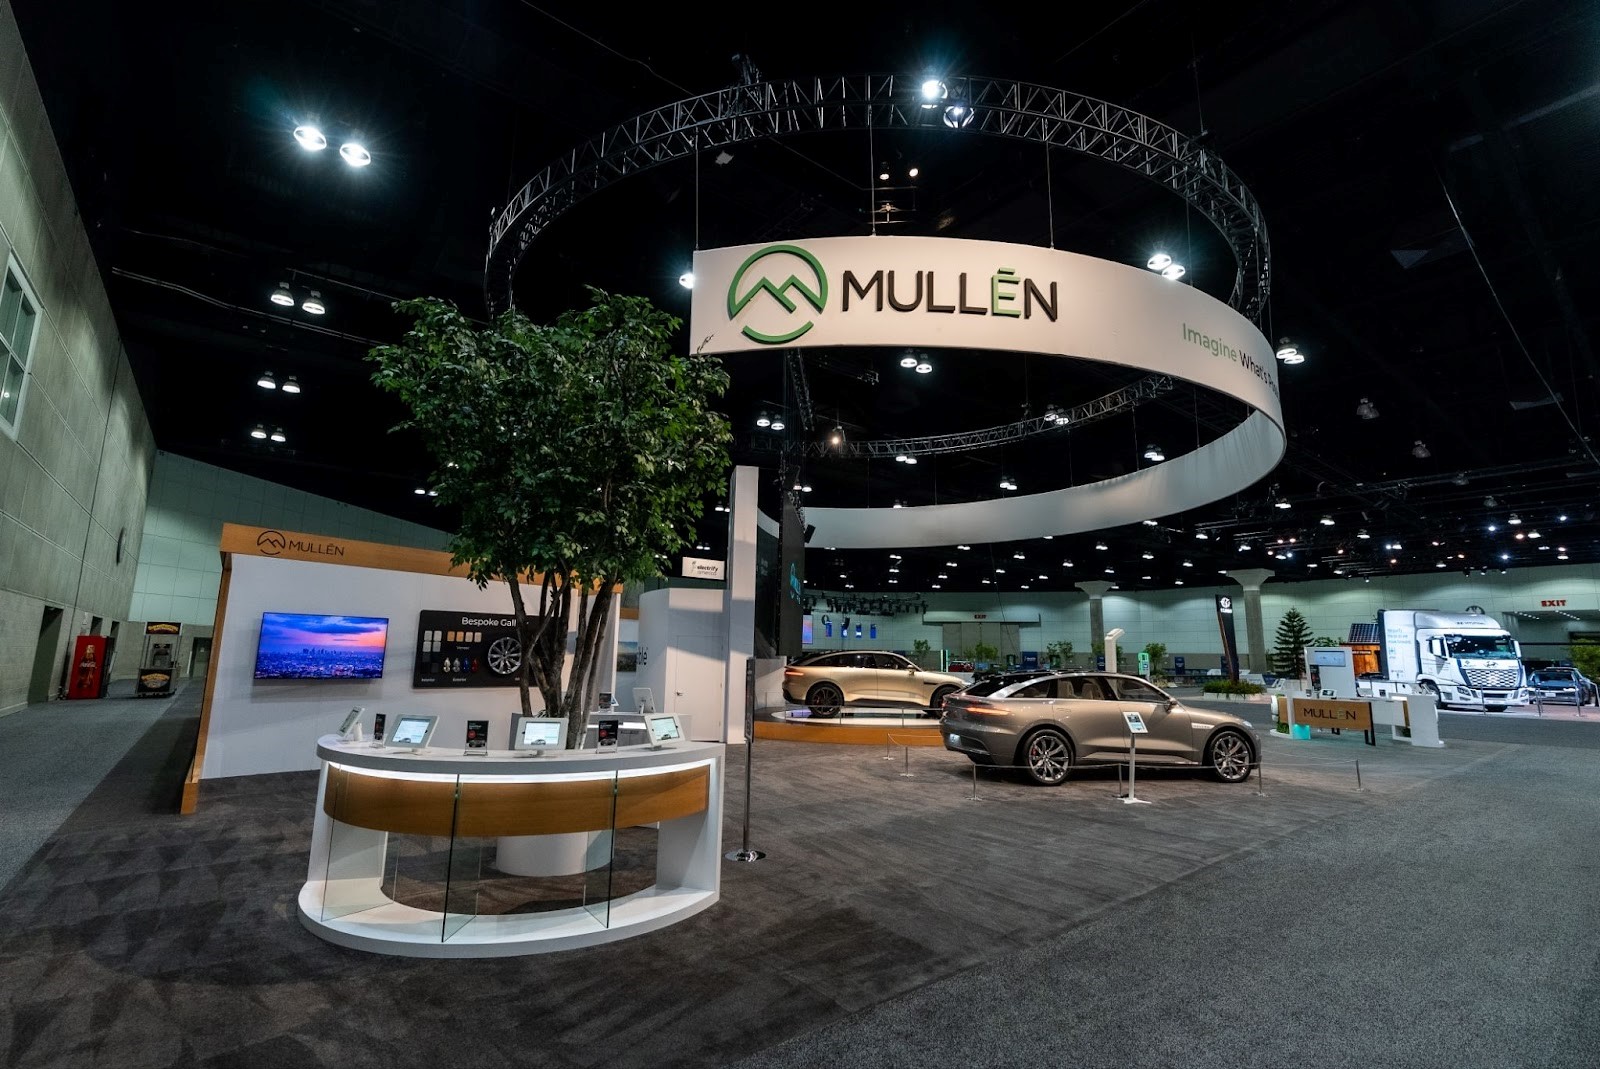 Mullen Exhibit at LA Auto Show - Global Experiential Marketing